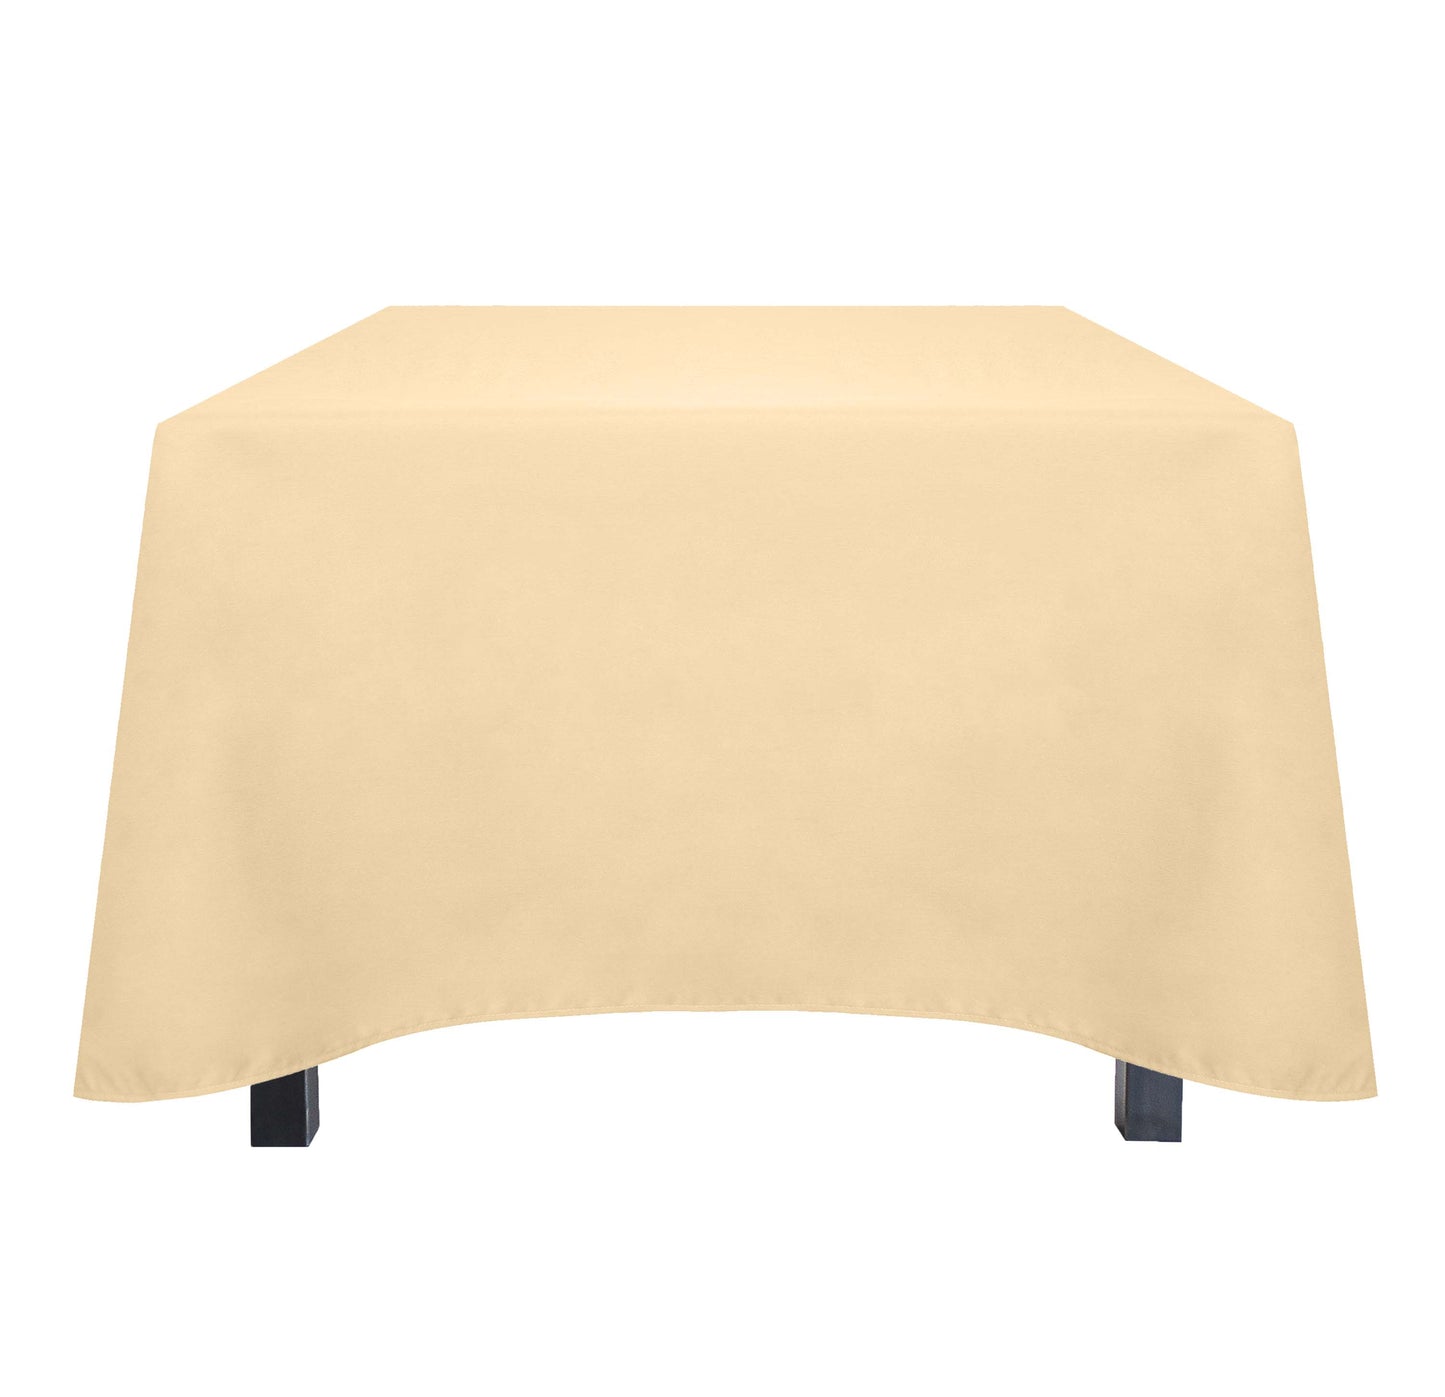 Tablecloth, Serenity, 54x54 inch, 48 pcs/pk